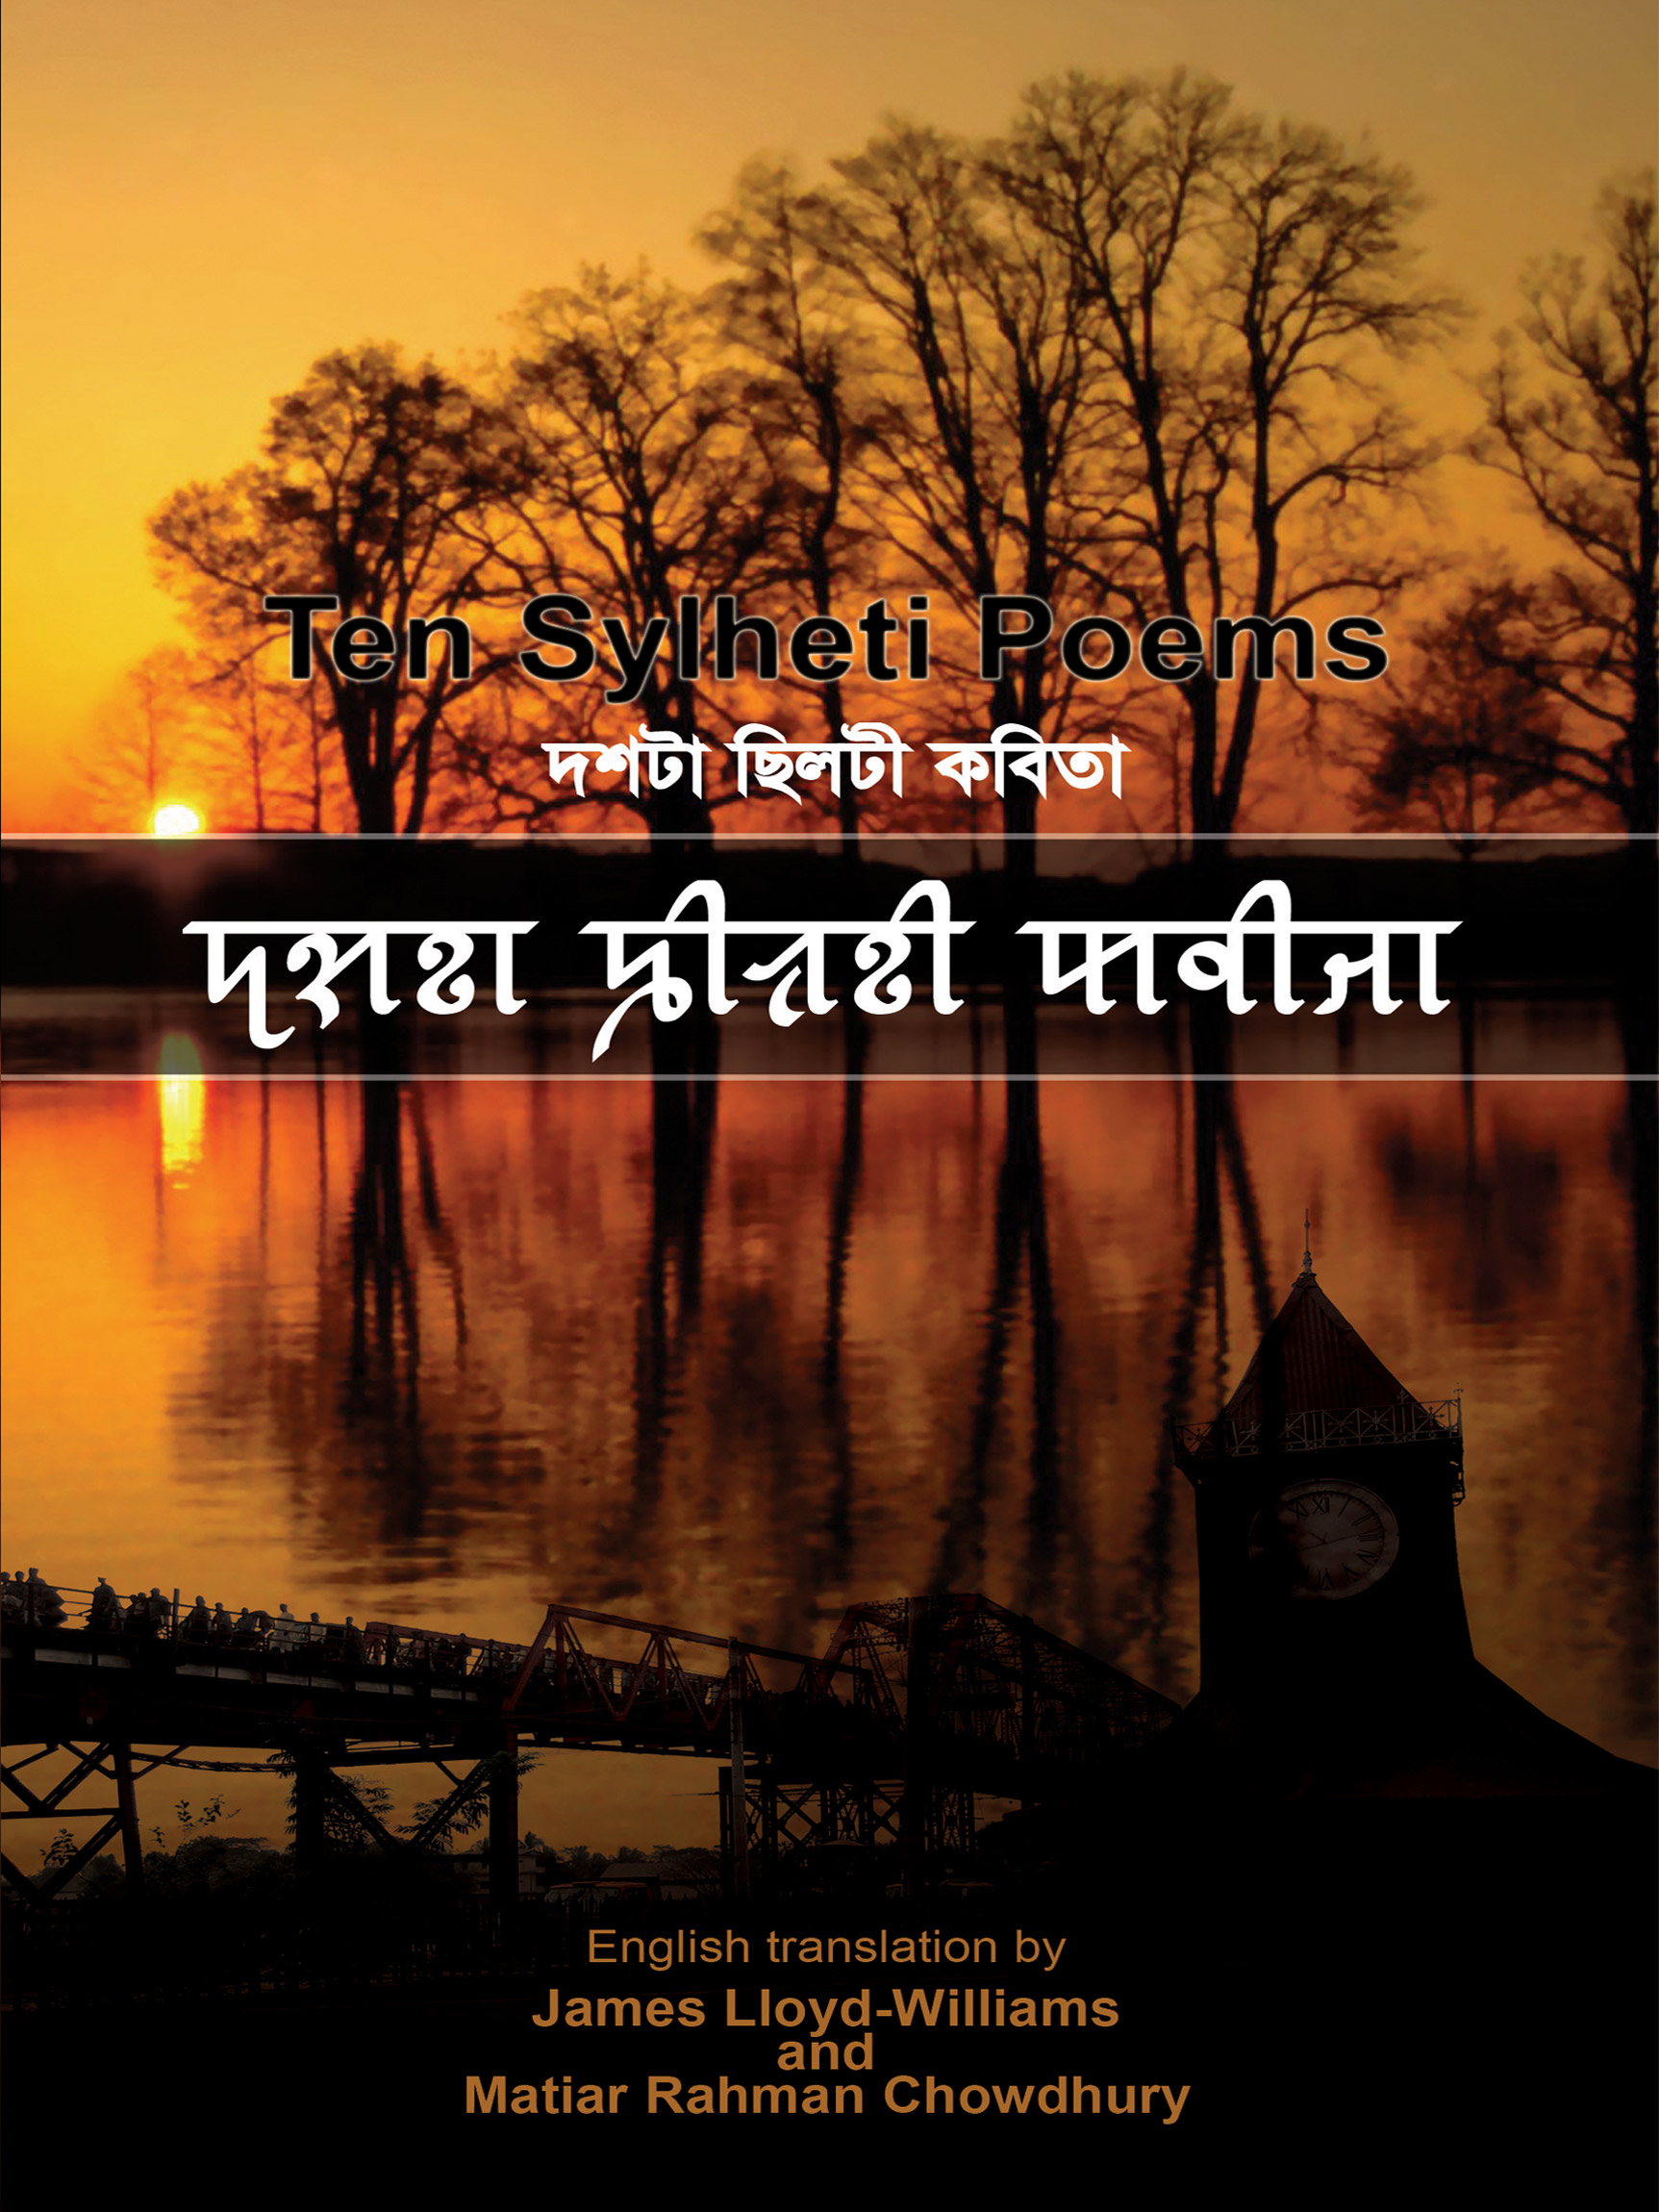 Ten Sylheti Poems book